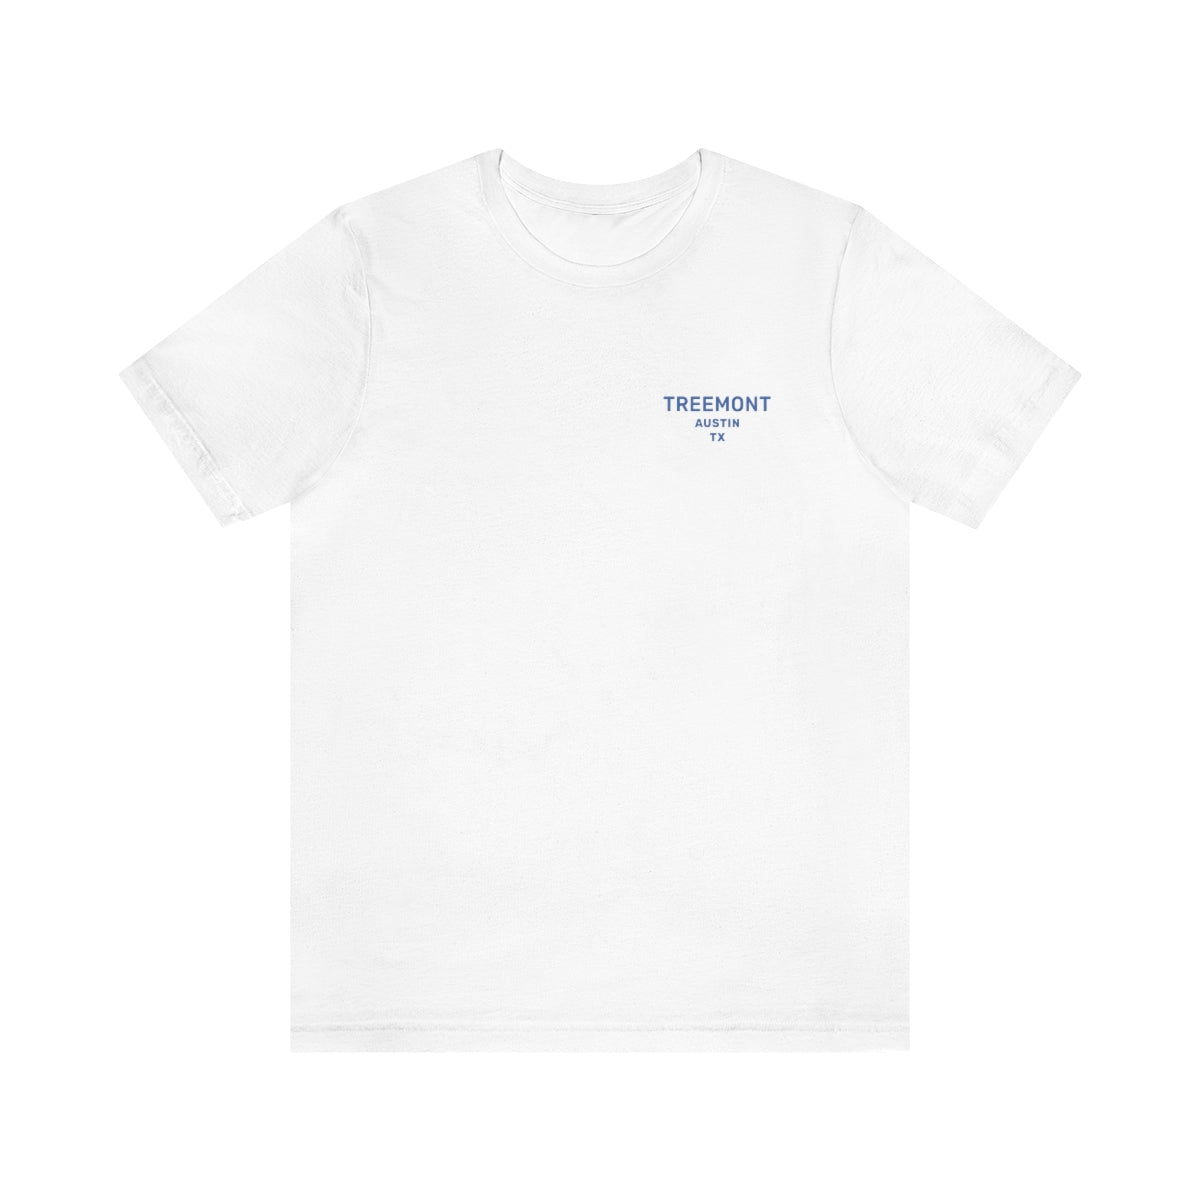 Treemont T-shirt: "Everyday"